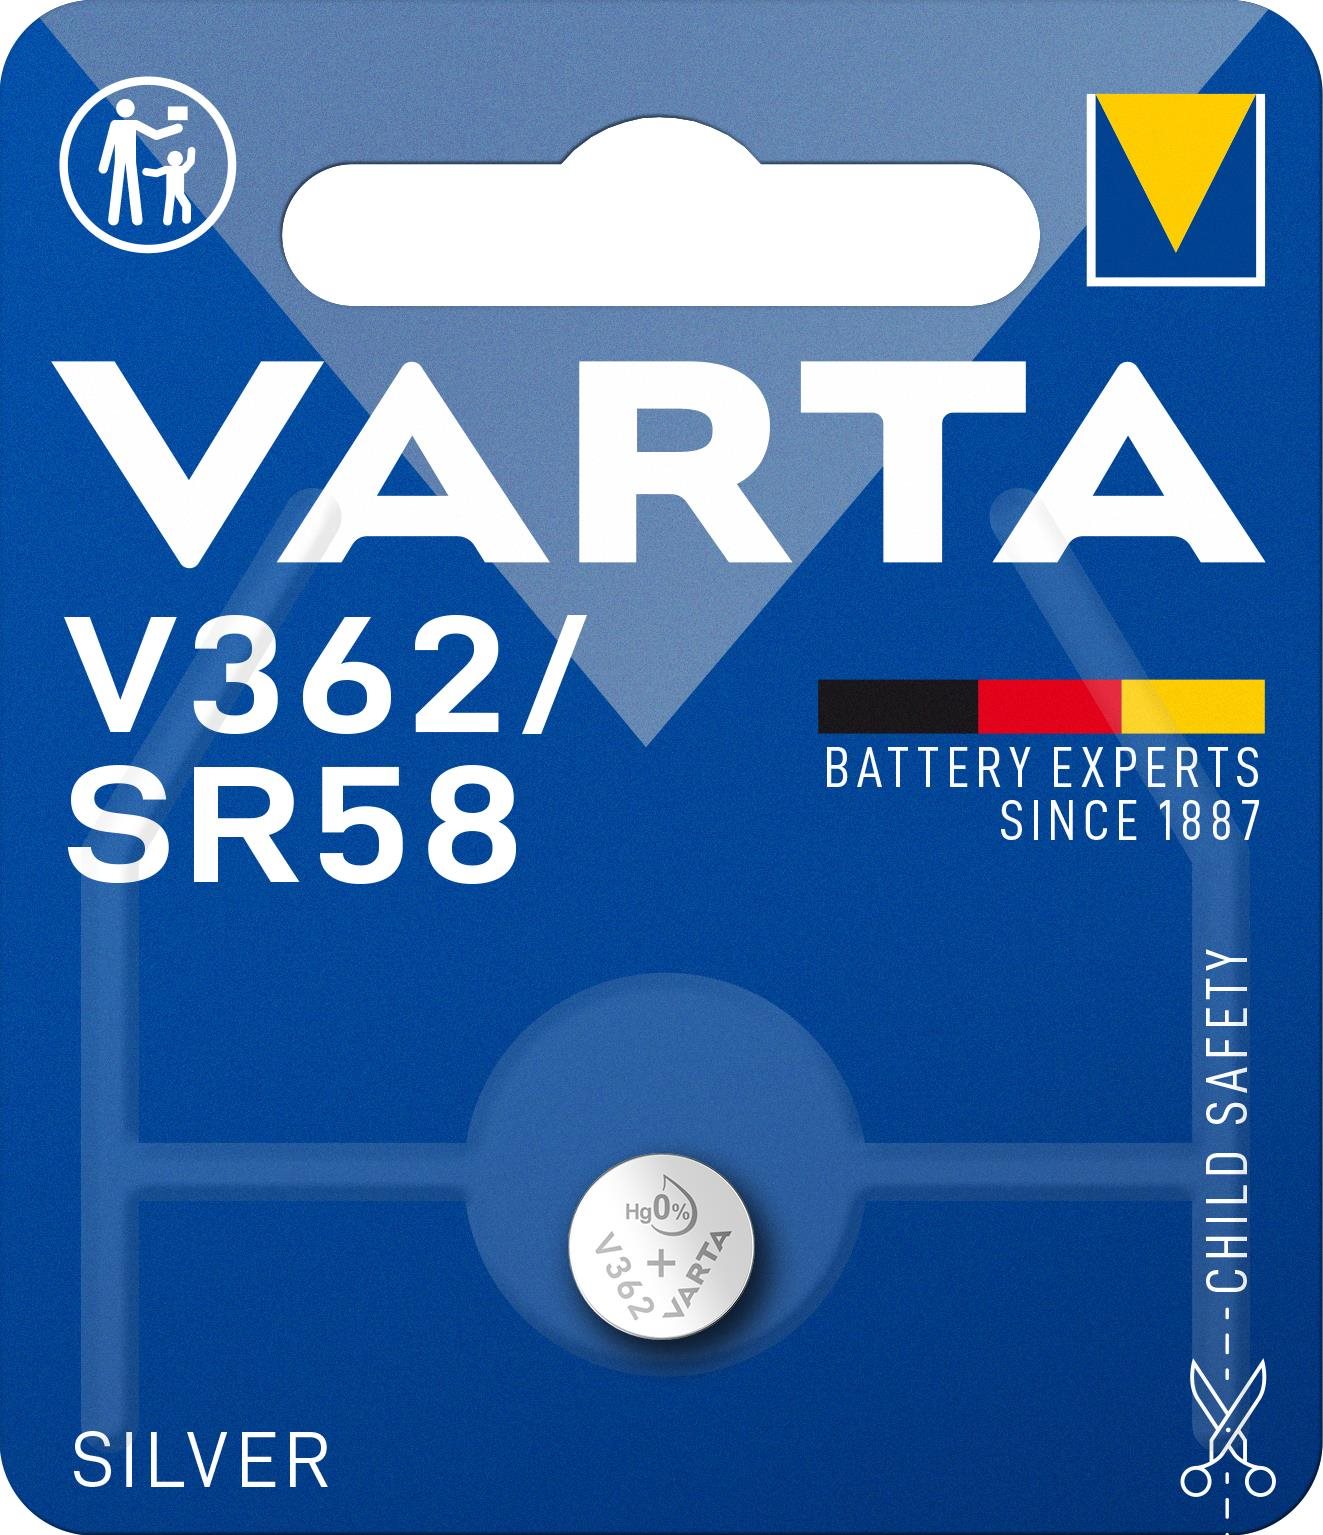 VARTA V362/SR58 Speciális ezüst-oxid elem - 1 db